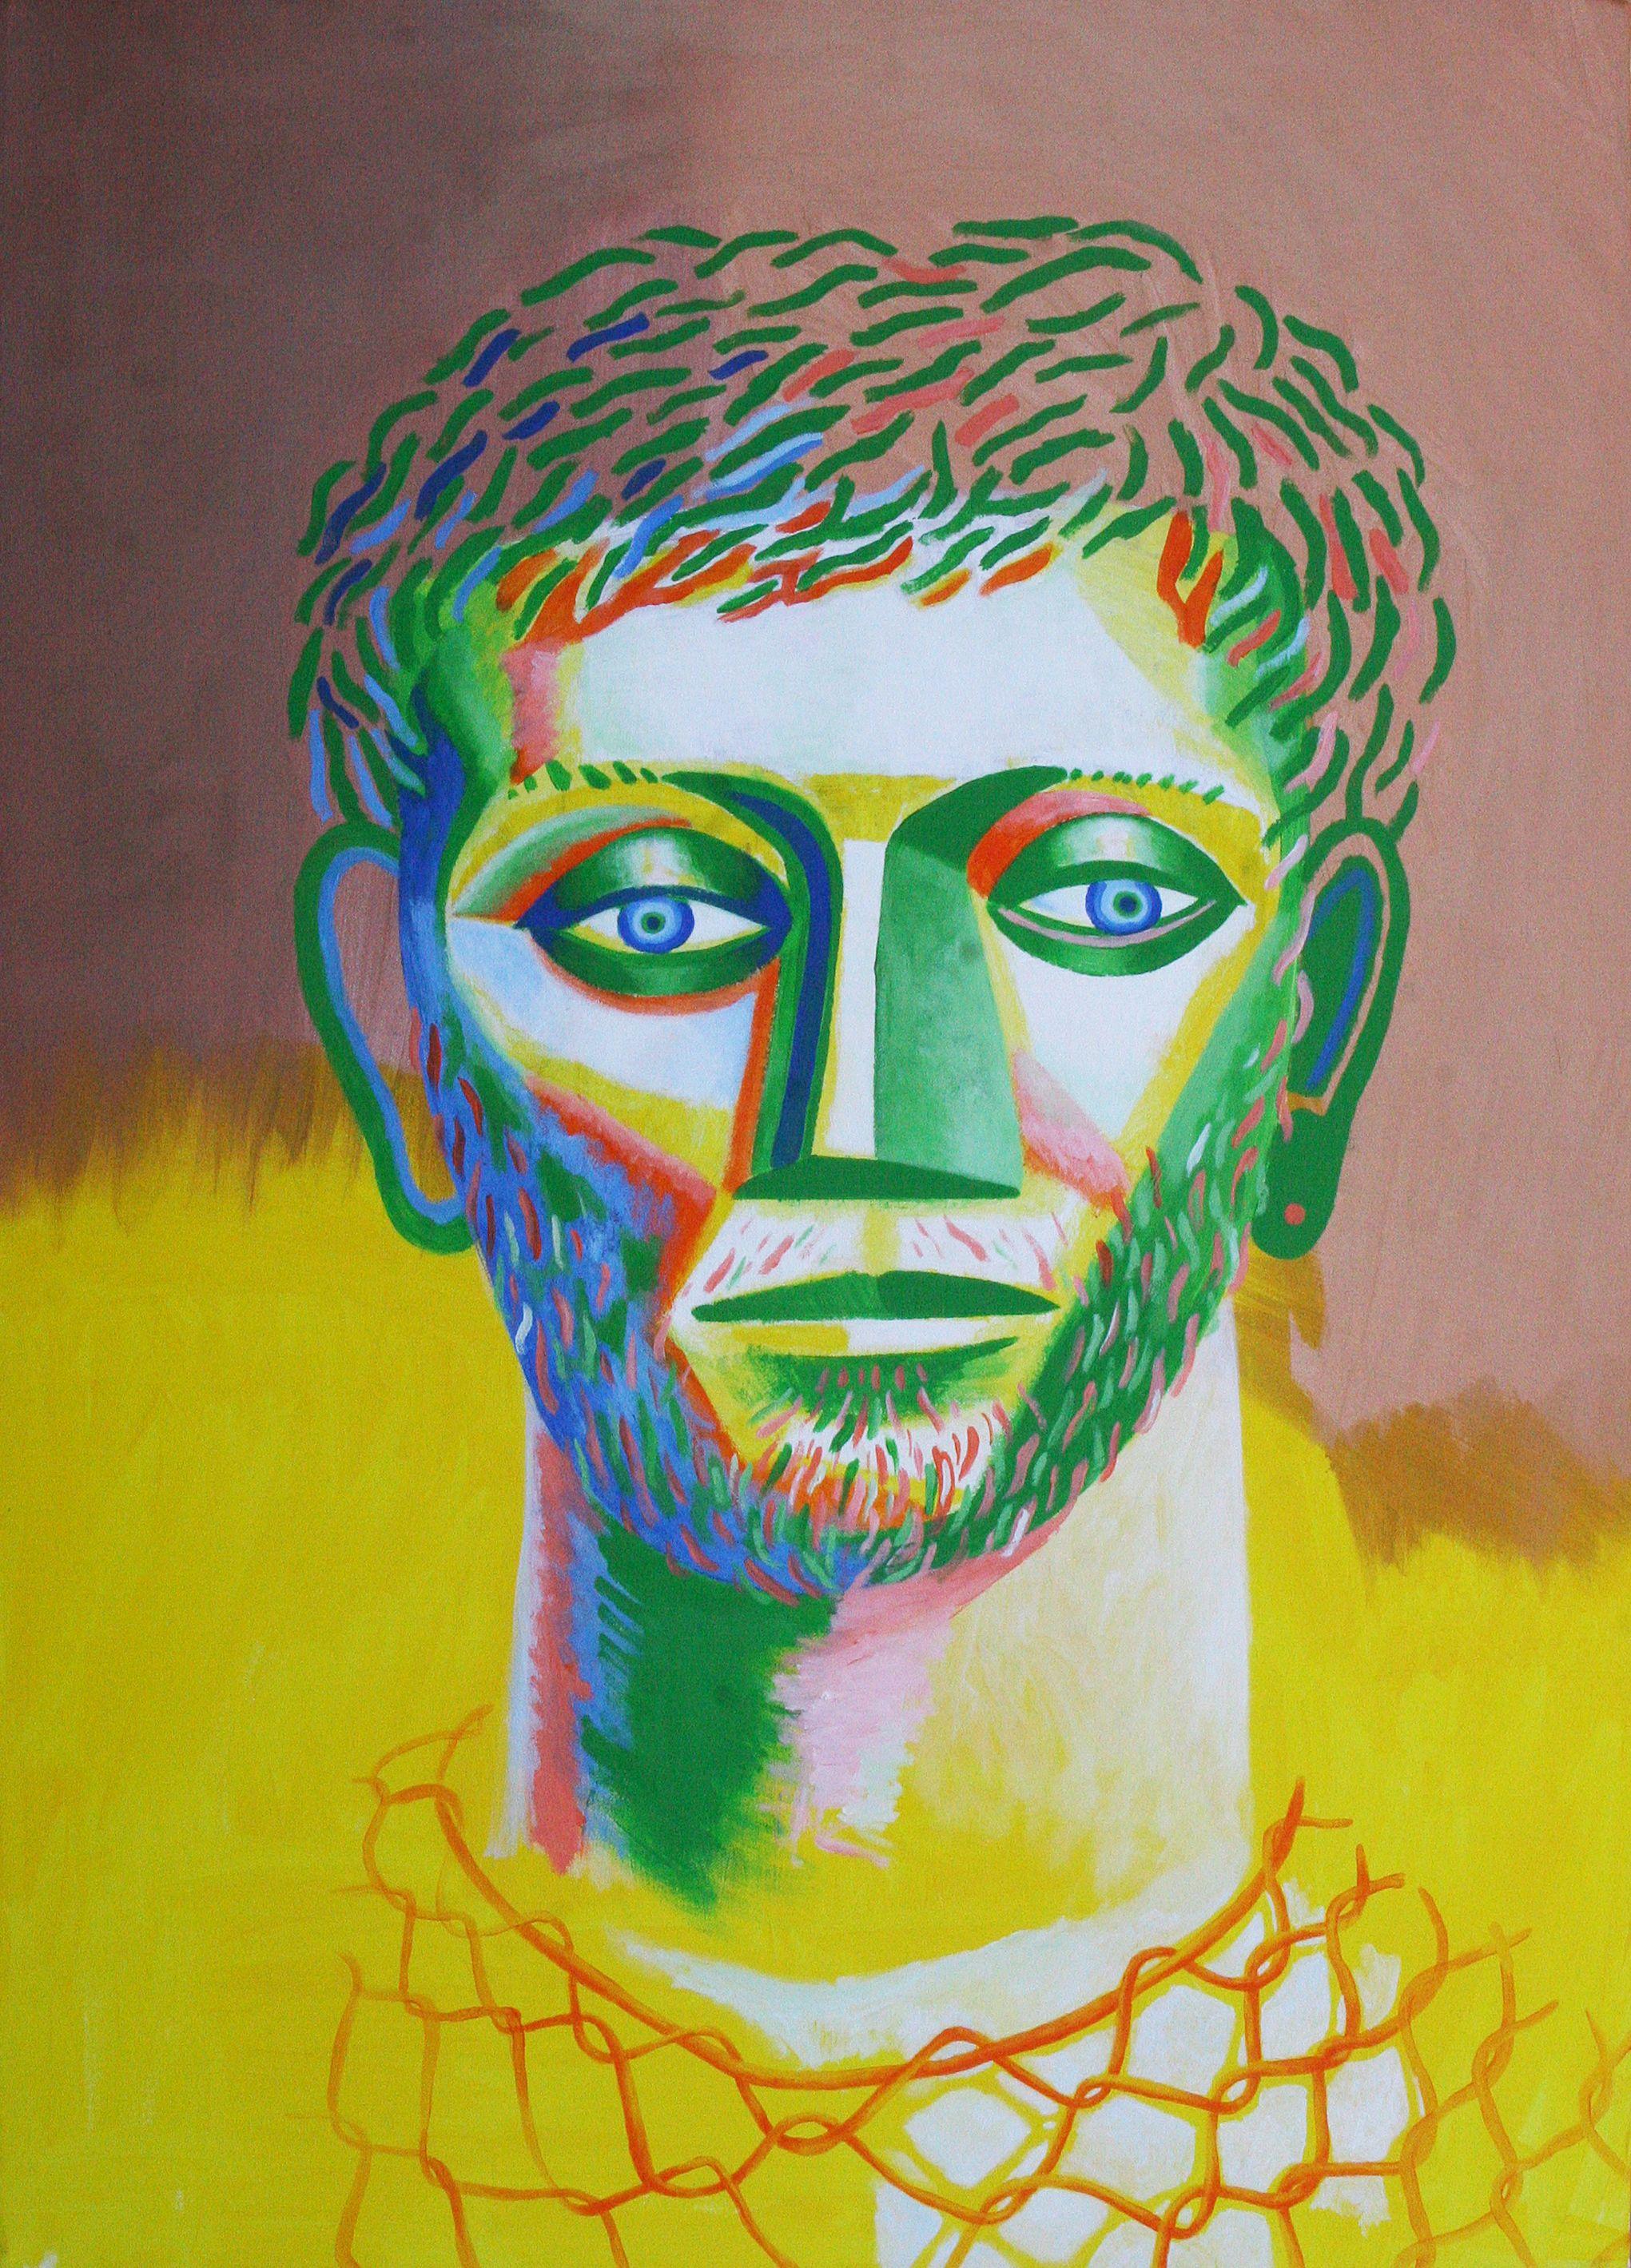 Alexandru Rădvan Portrait Painting - Untitled - Contemporary Art, Yellow, Green, Human Portrait, Male, 21st Century